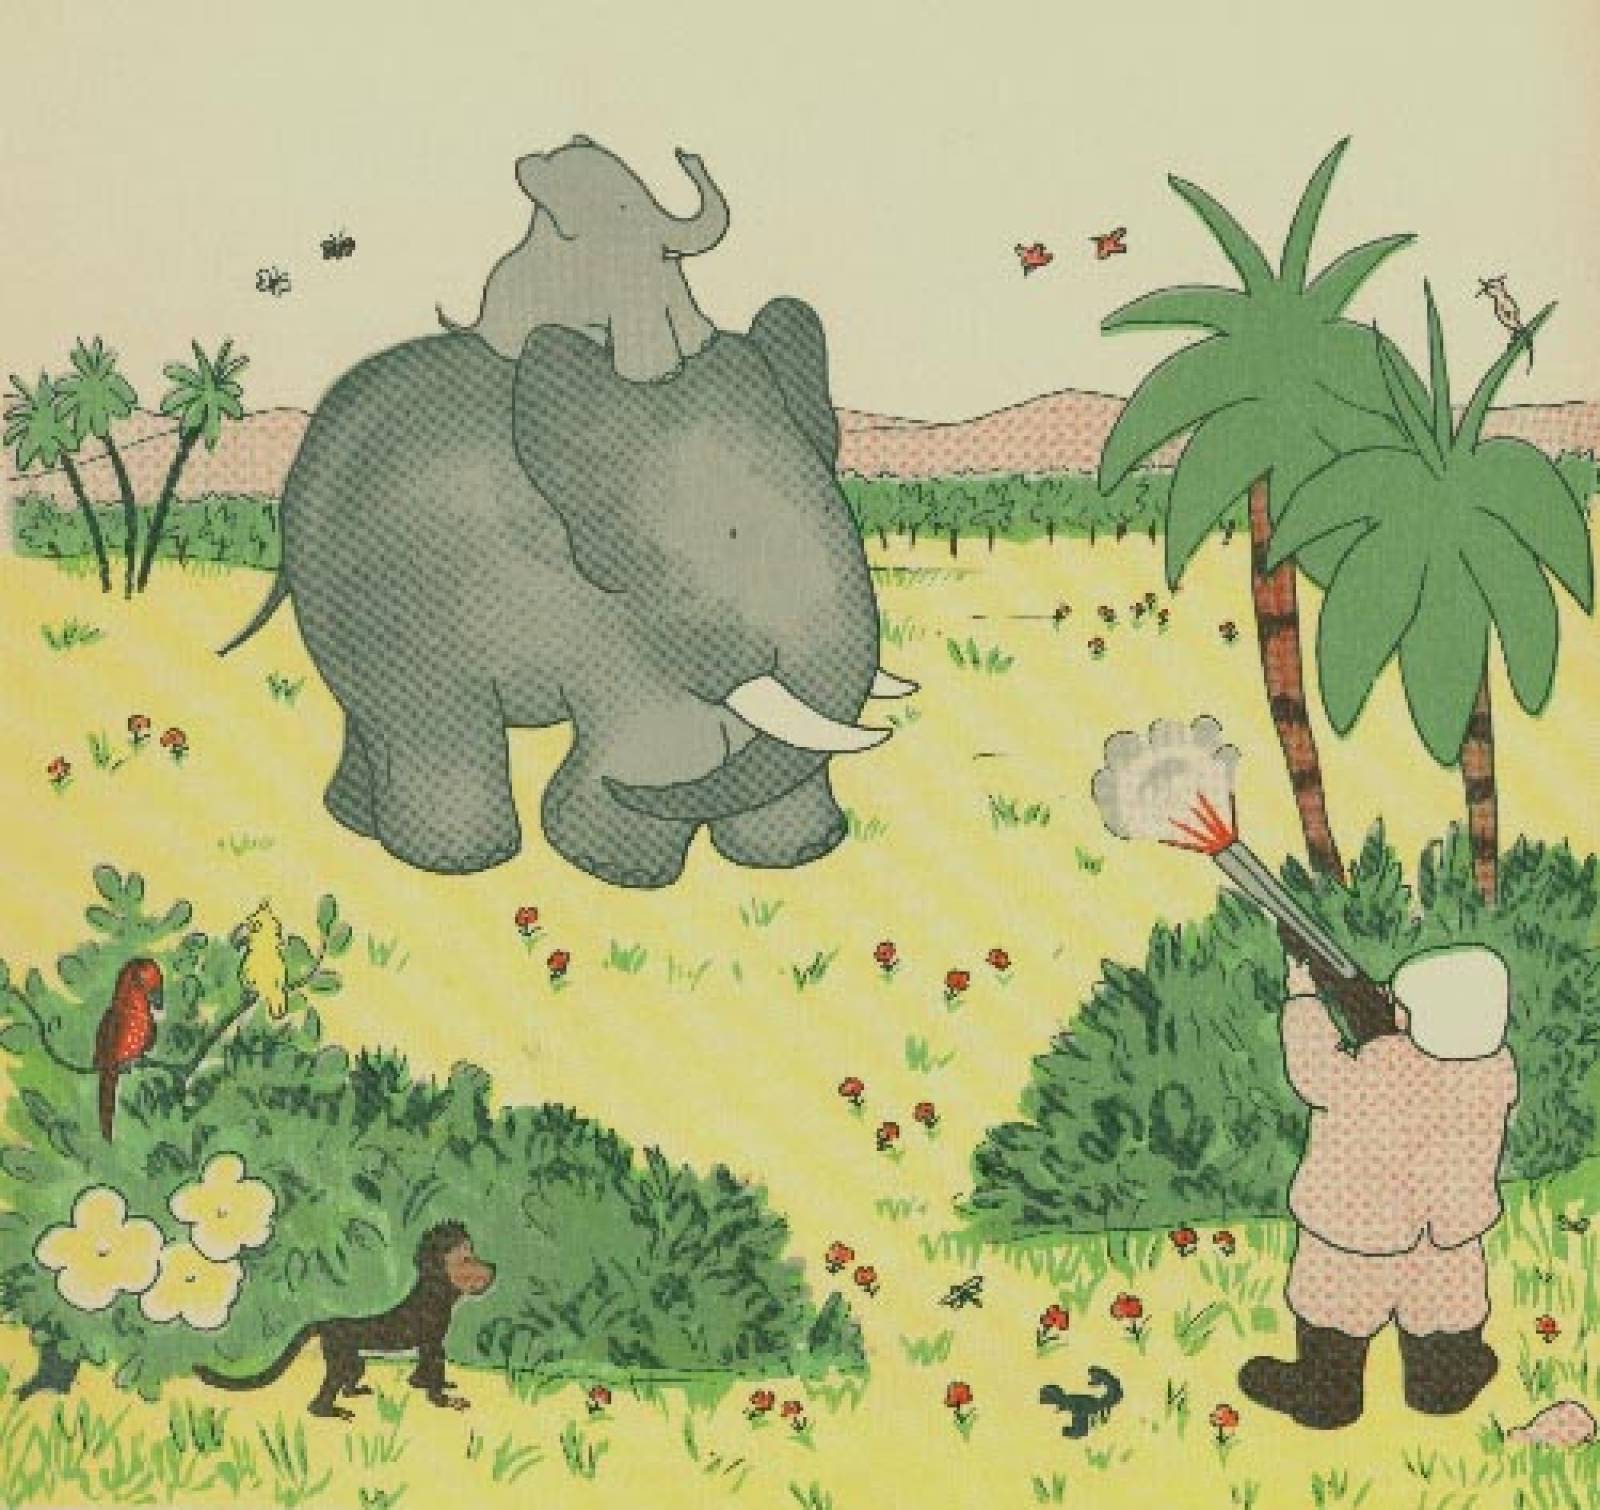 babar the elephant books